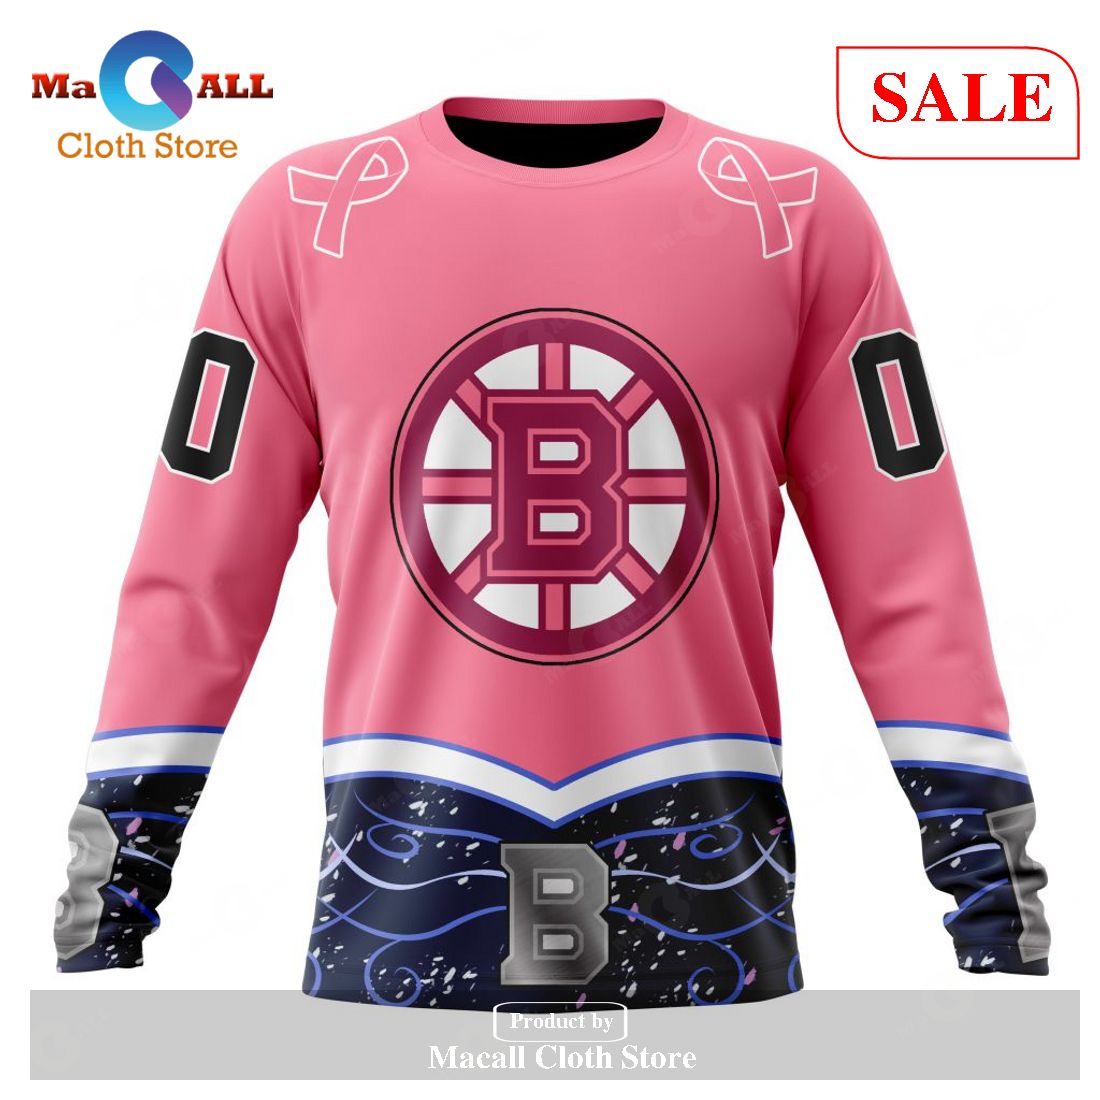 2022 boston bruins nhl hockey fights cancer shirt, hoodie, sweater